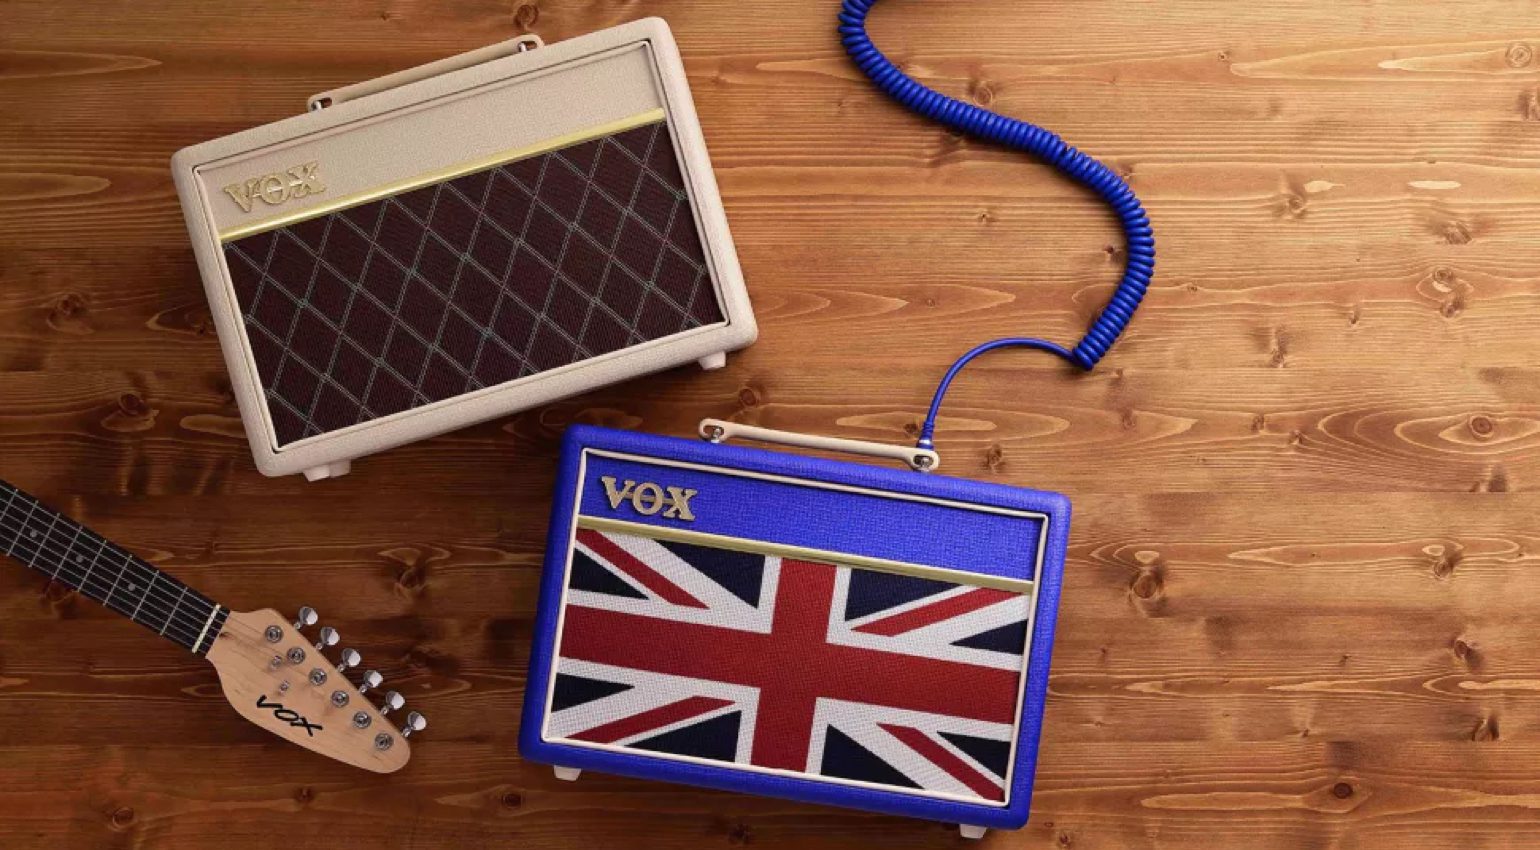 VOX Pathfinder 10 Union Jack Royal Blue & Creme Brown Limited Edition